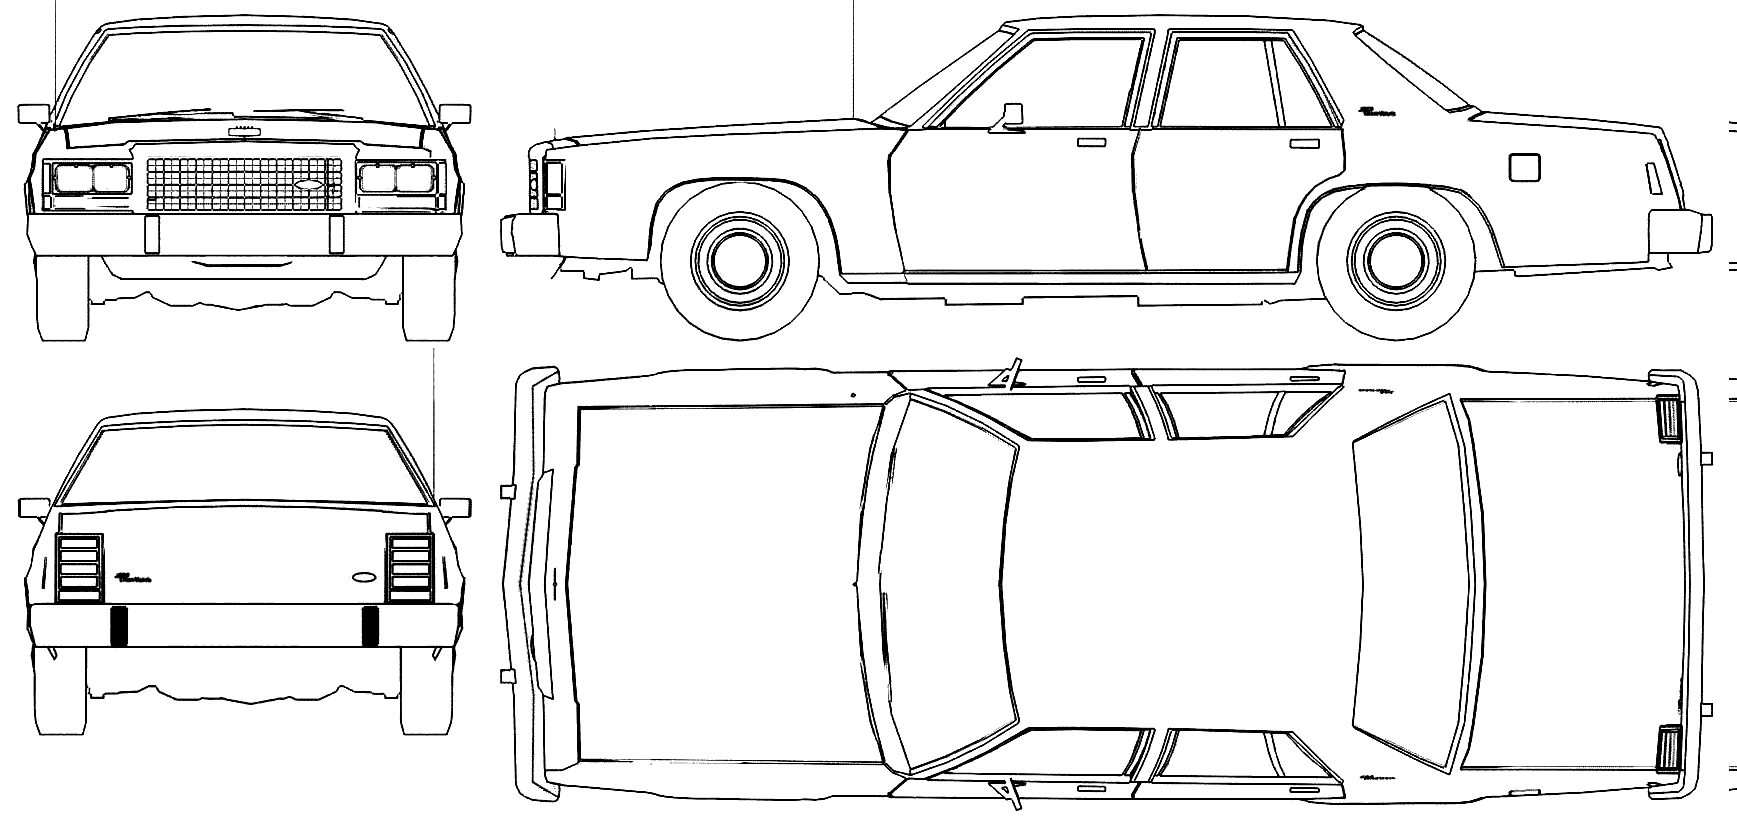 1985 Ford Crown Victoria Sedan blueprints free - Outlines